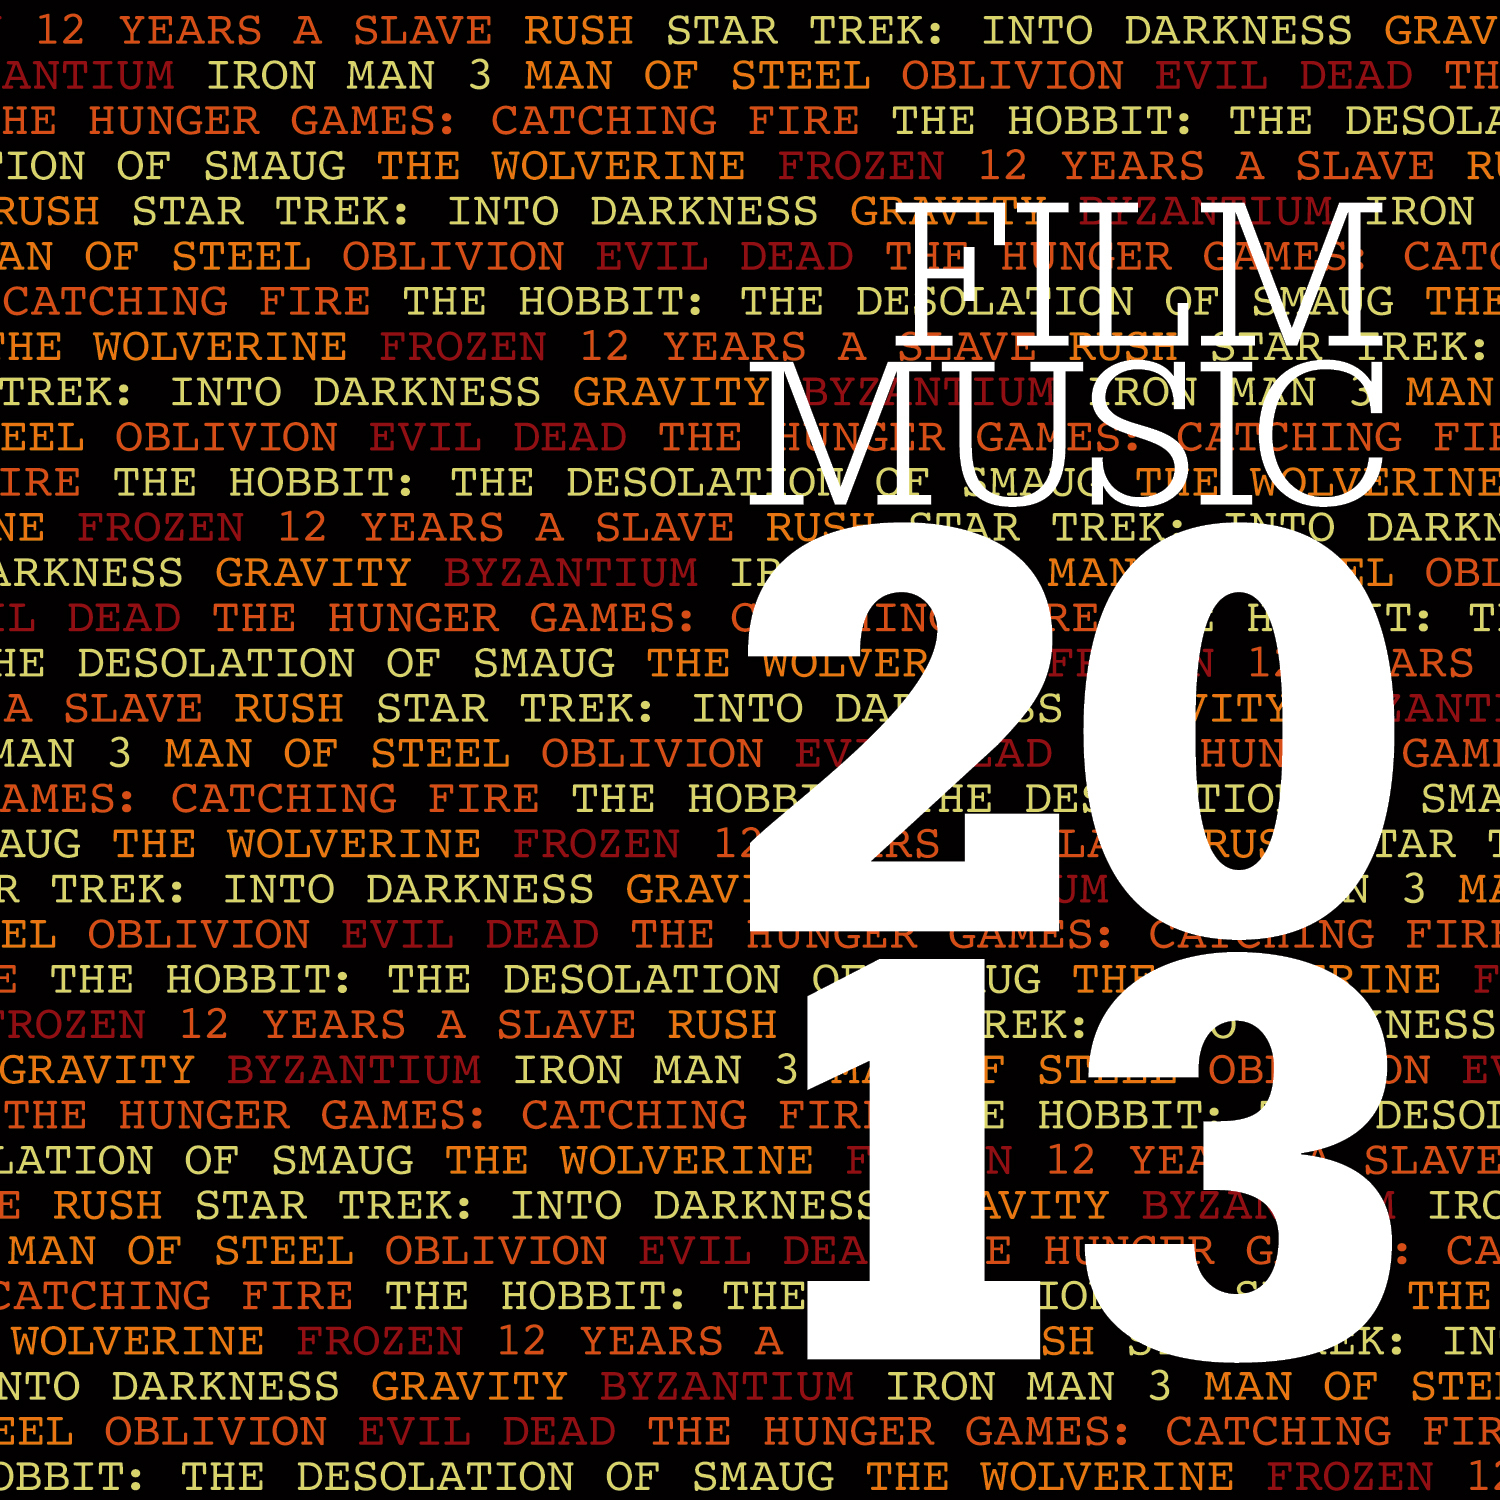 Film Music Masterworks - James Horner